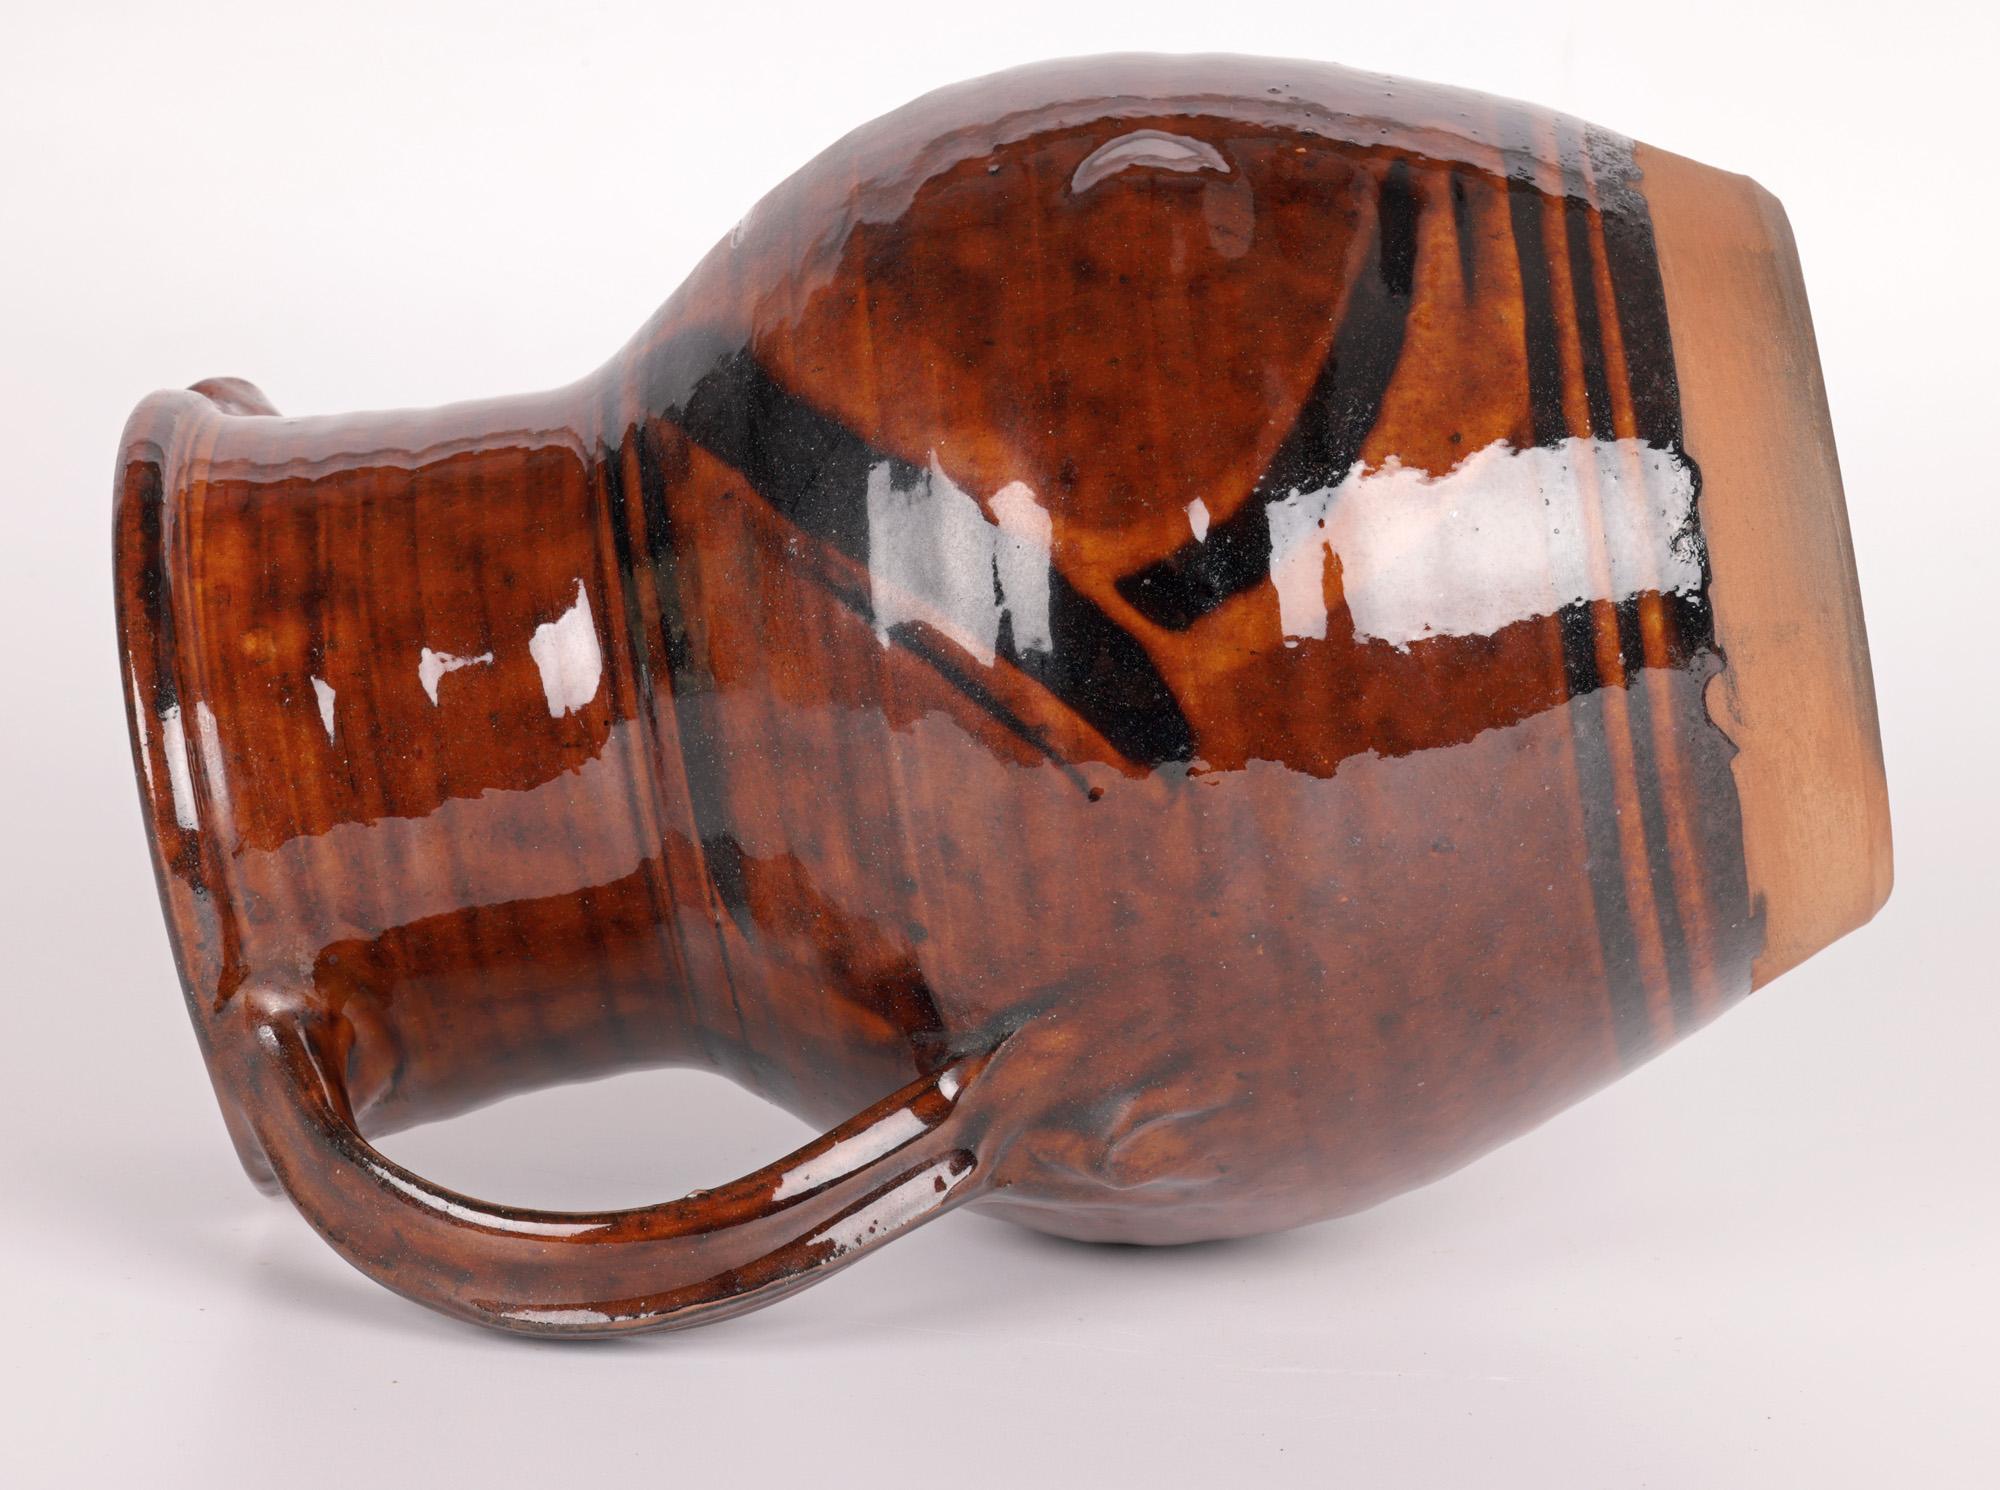 Earthenware Clive Bowen Studio Pottery Slip Trailed Honey Glazed Jug For Sale